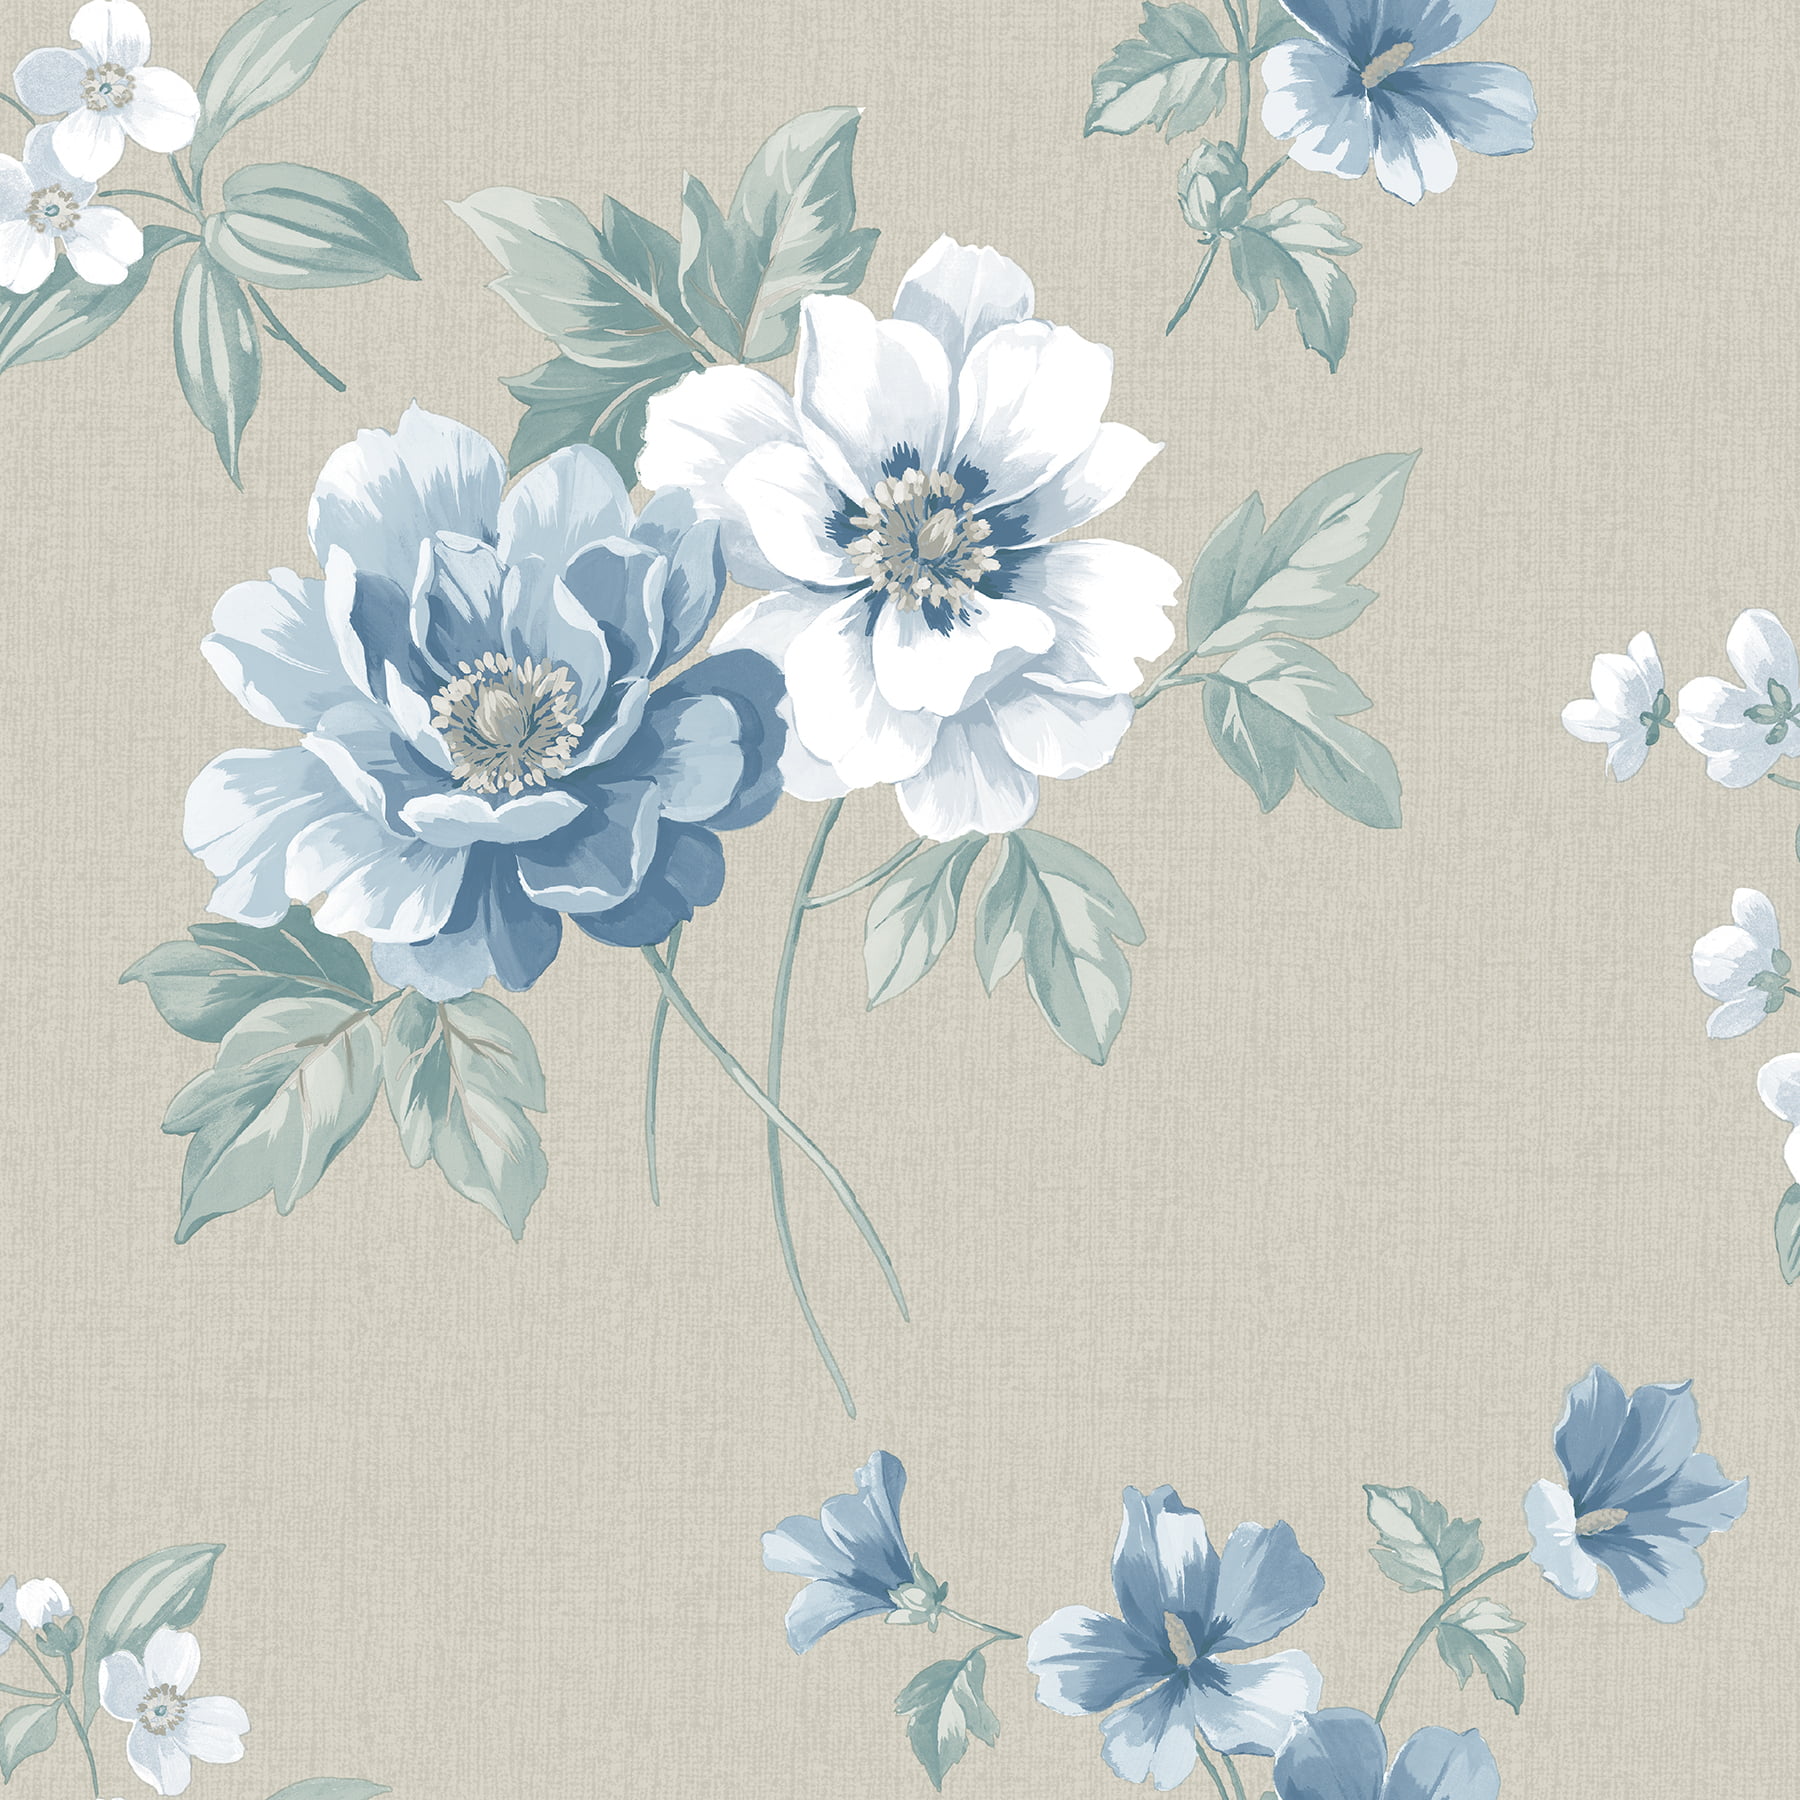 AST4170  Chandelier Gates Sky Blue Floral Drape Wallpaper  by AStreet  Prints